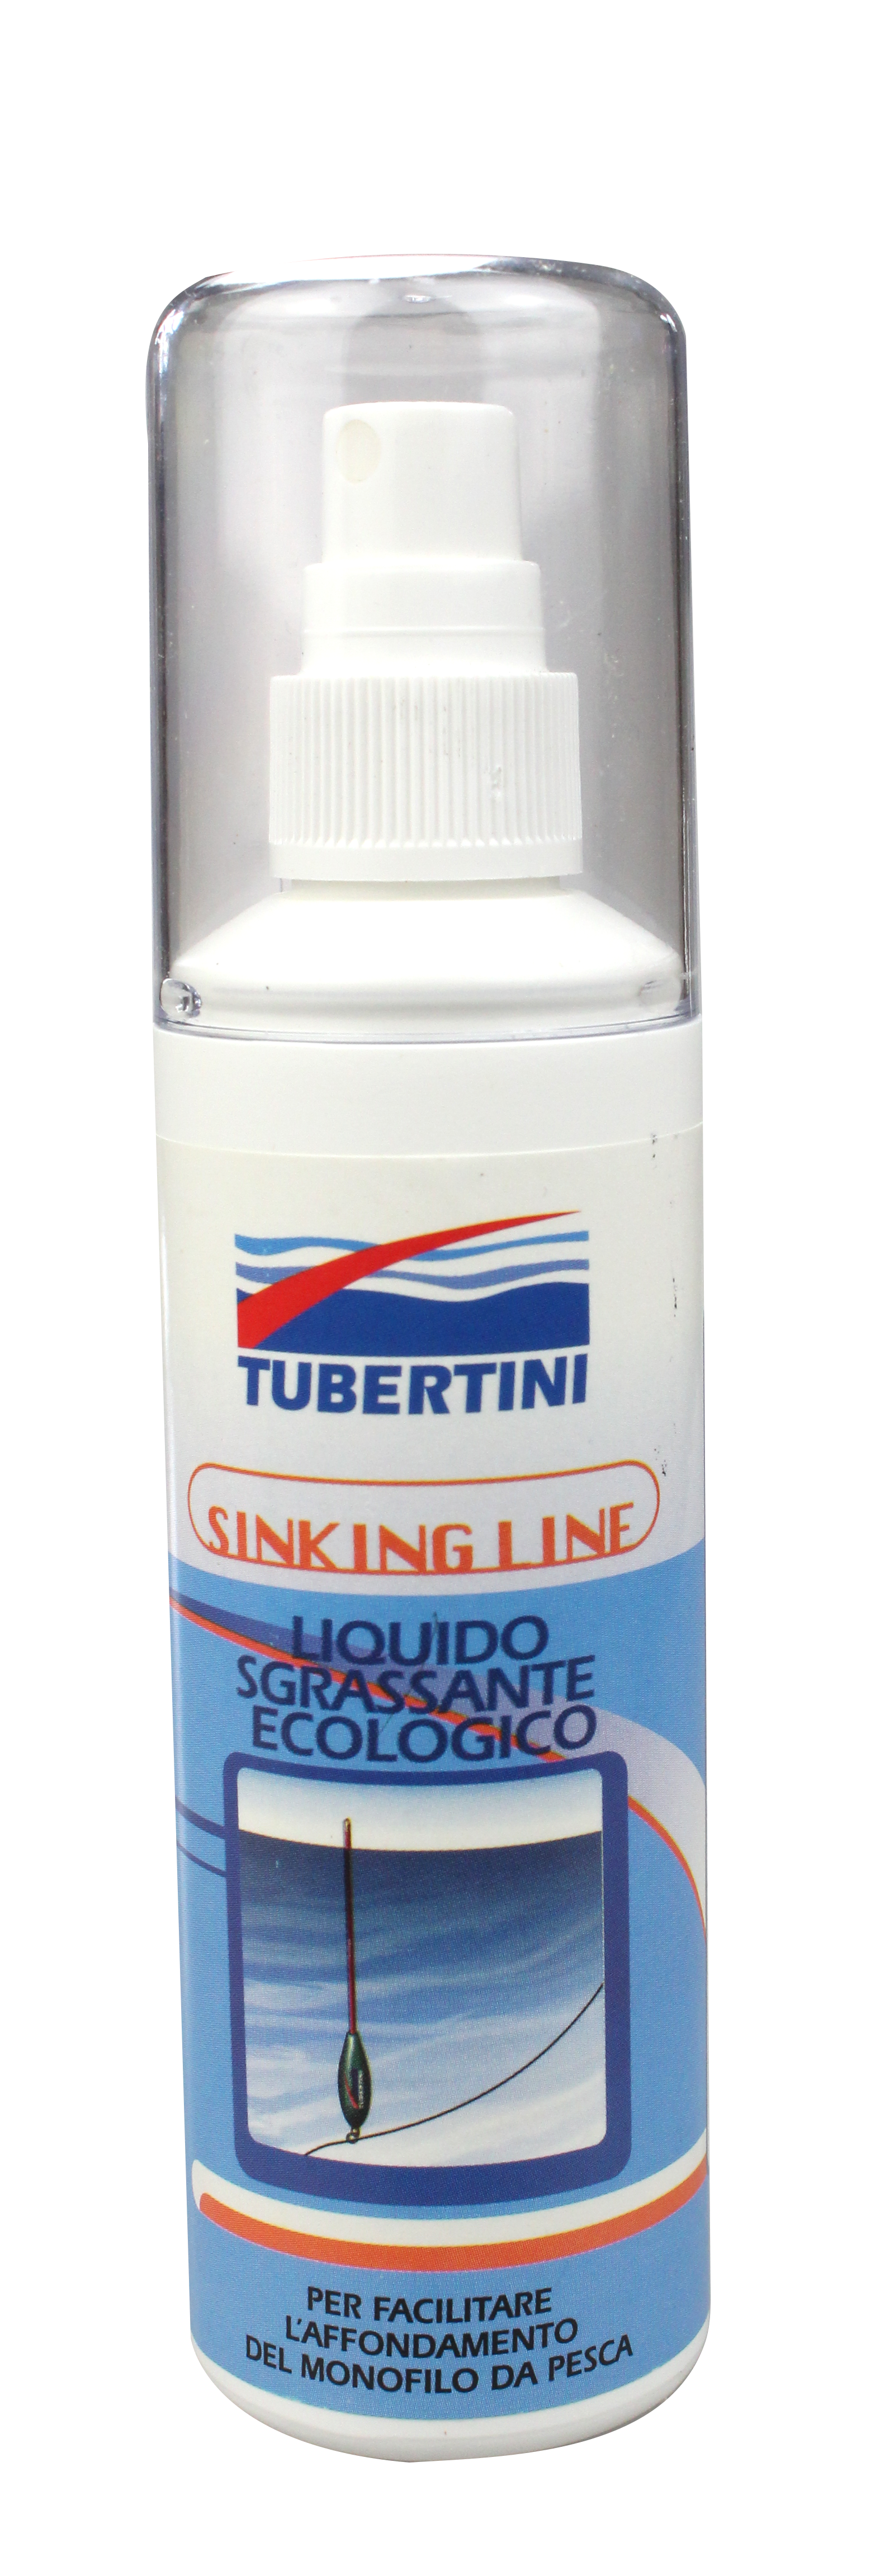 Tubertini Sinking Line Spray